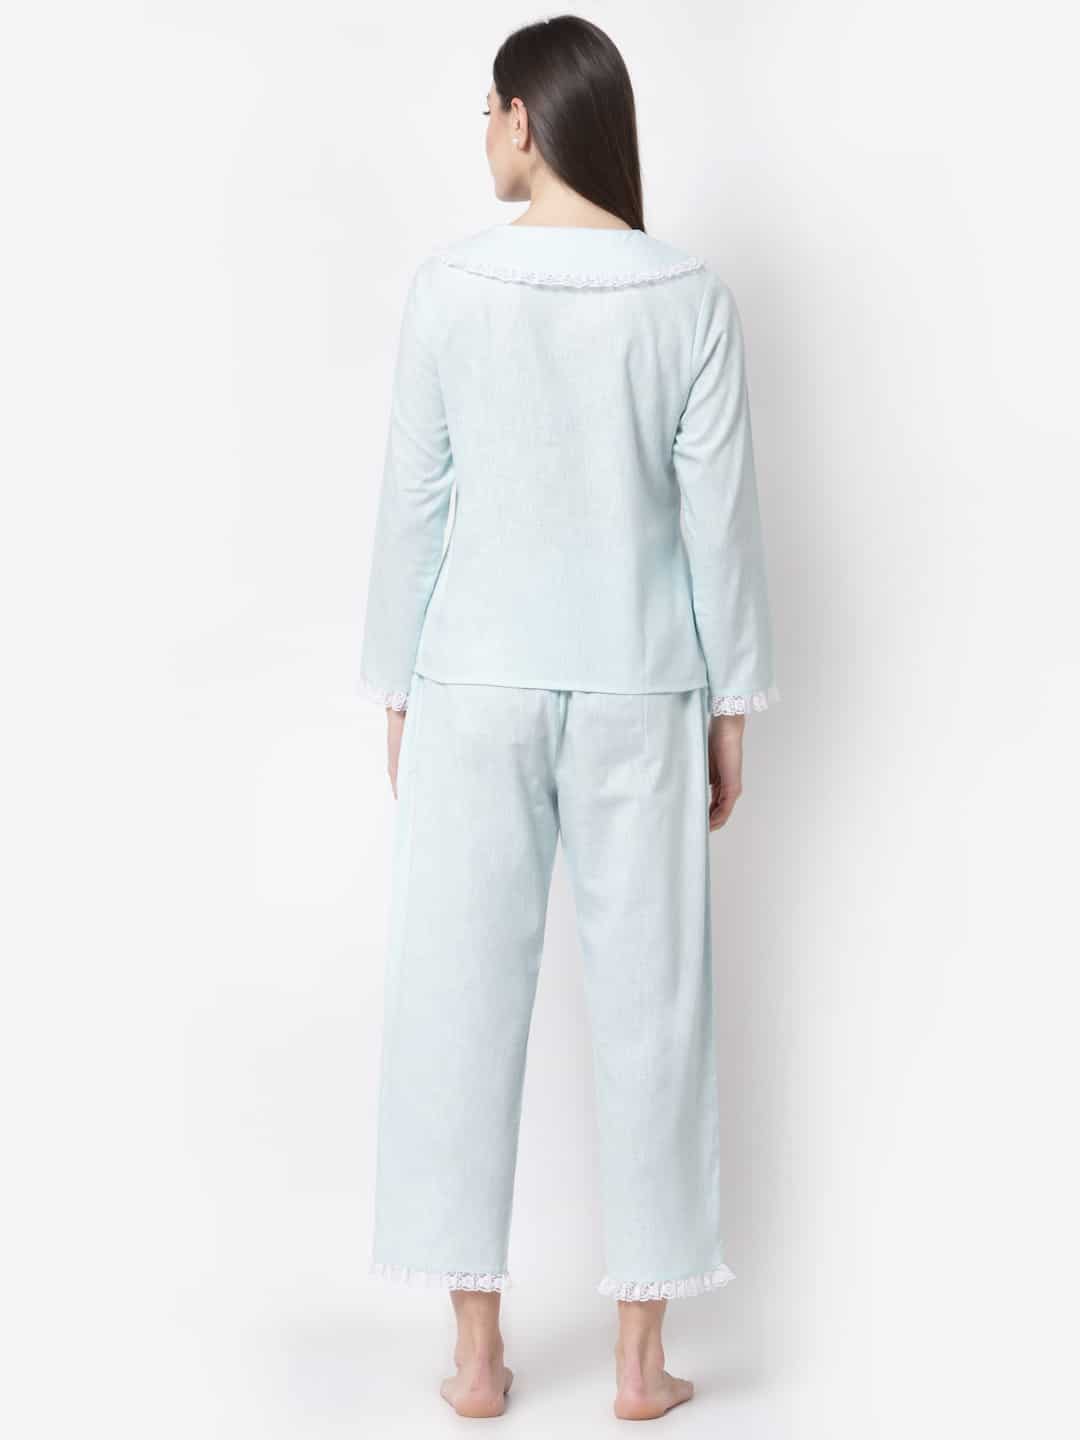 Lacy Cotton Blue Pretty Pyjama Night Suit